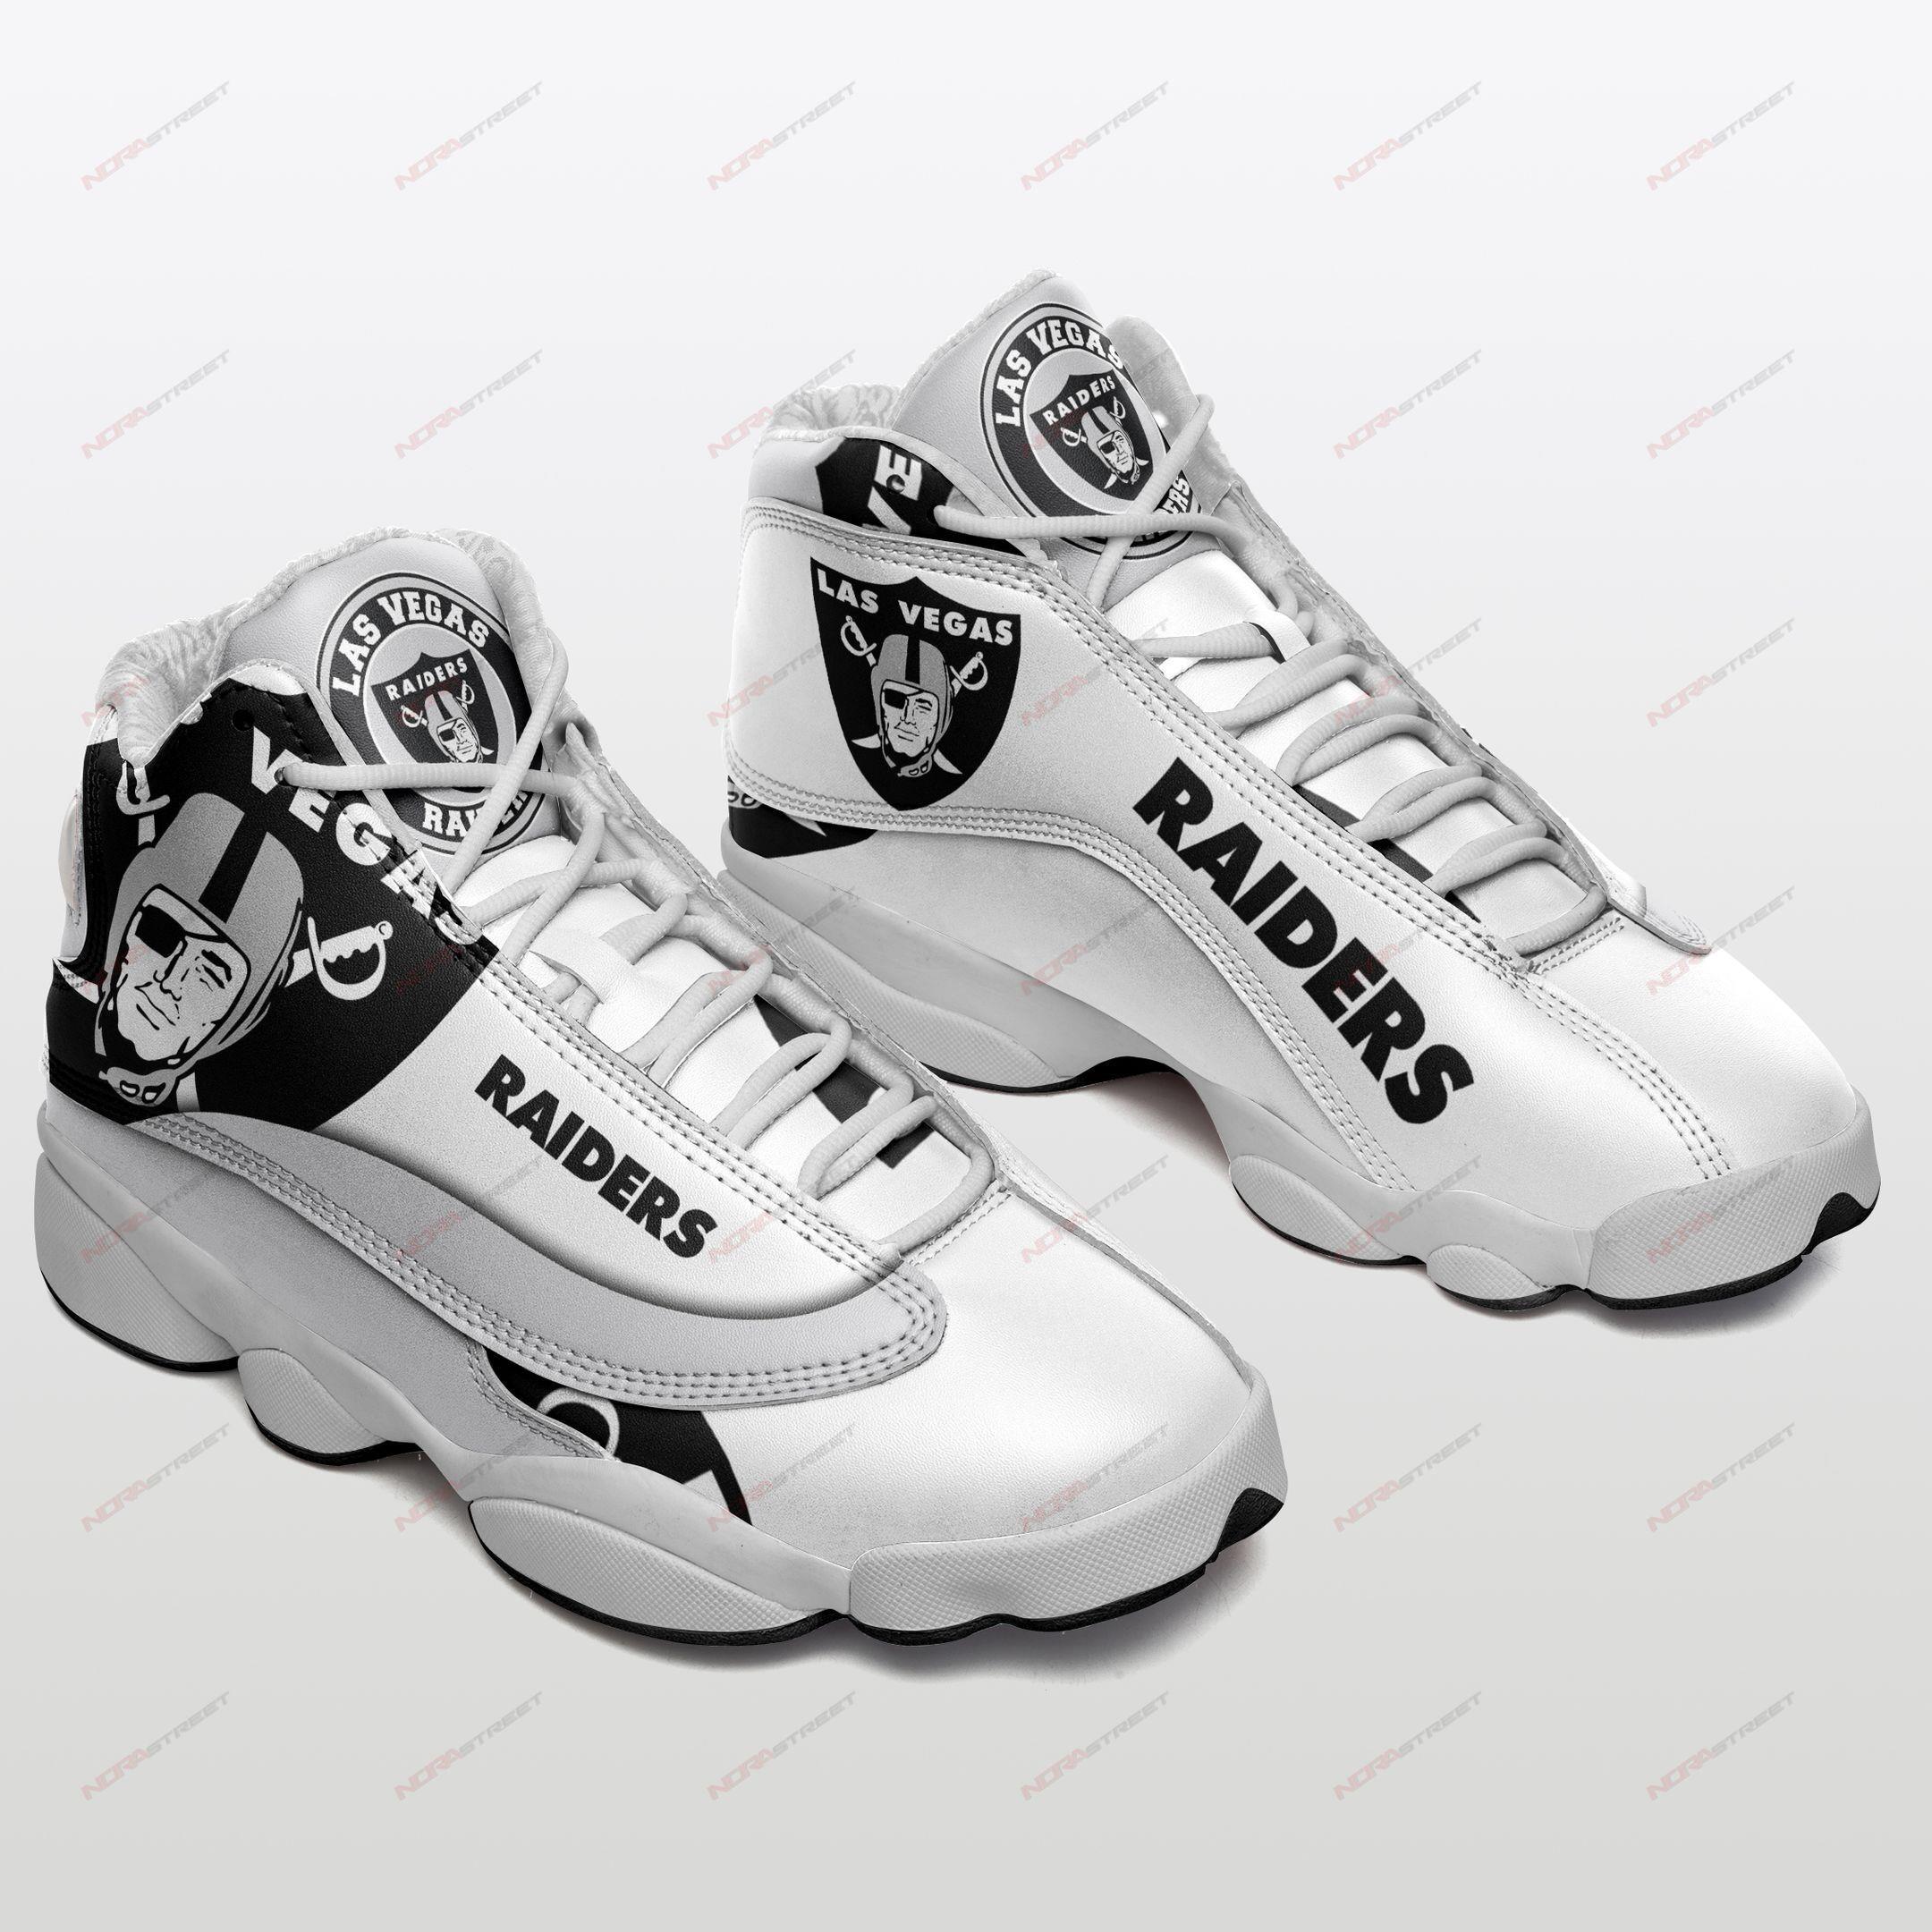 Oakland Raiders Air Jordan 13 Sneakers Sport Shoes Full Size